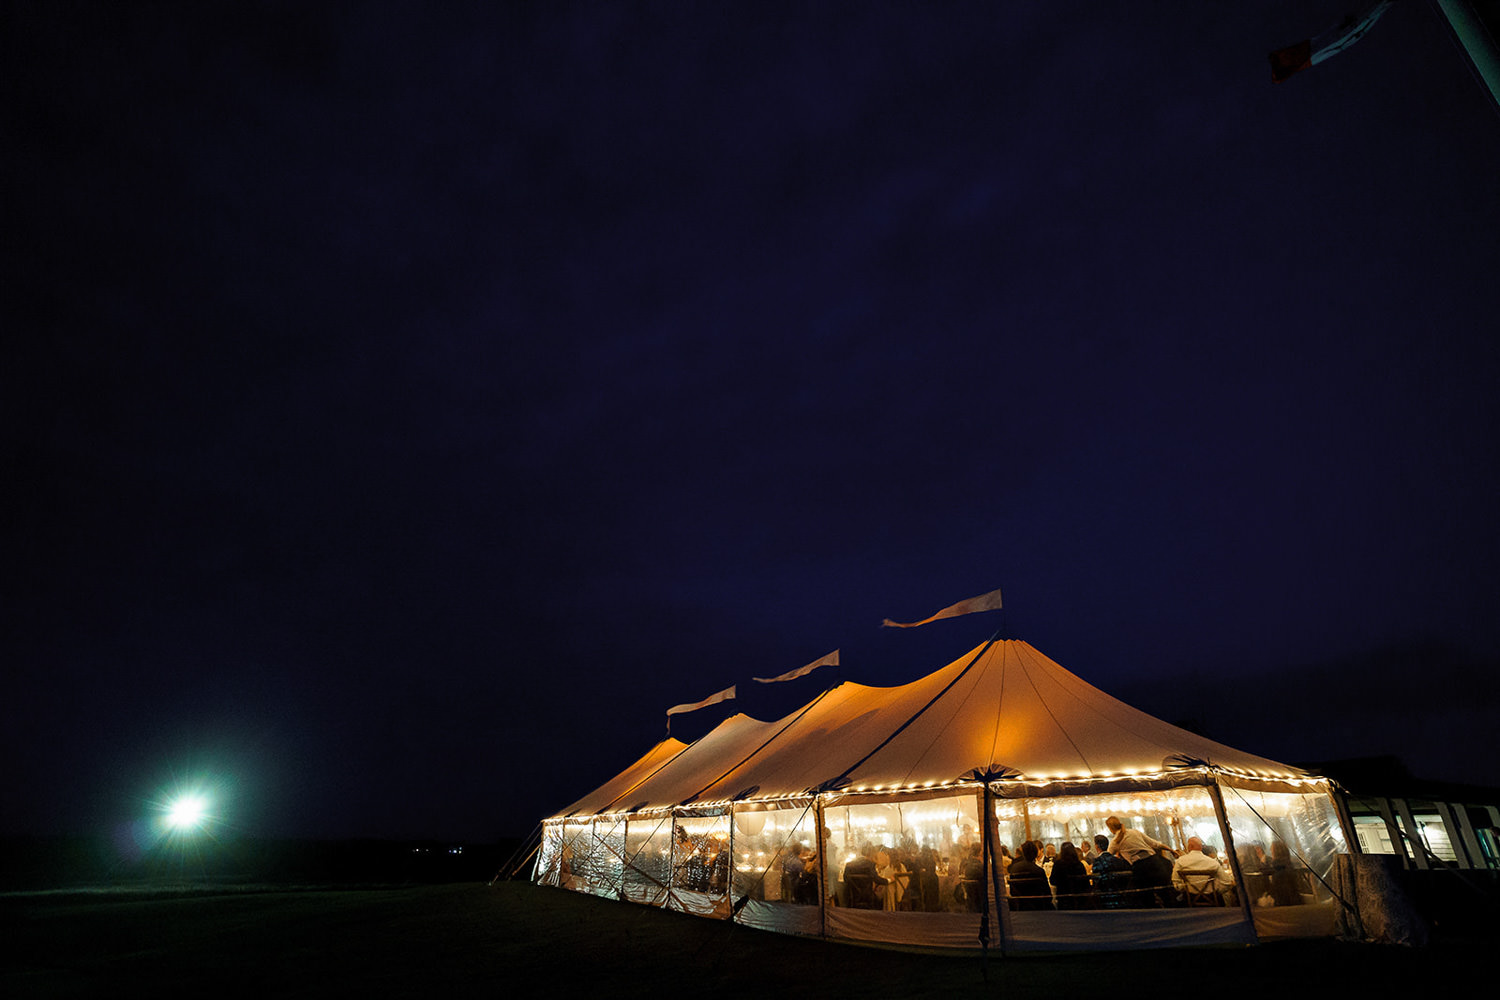 Sankaty Head Golf Club reception tent photo at night